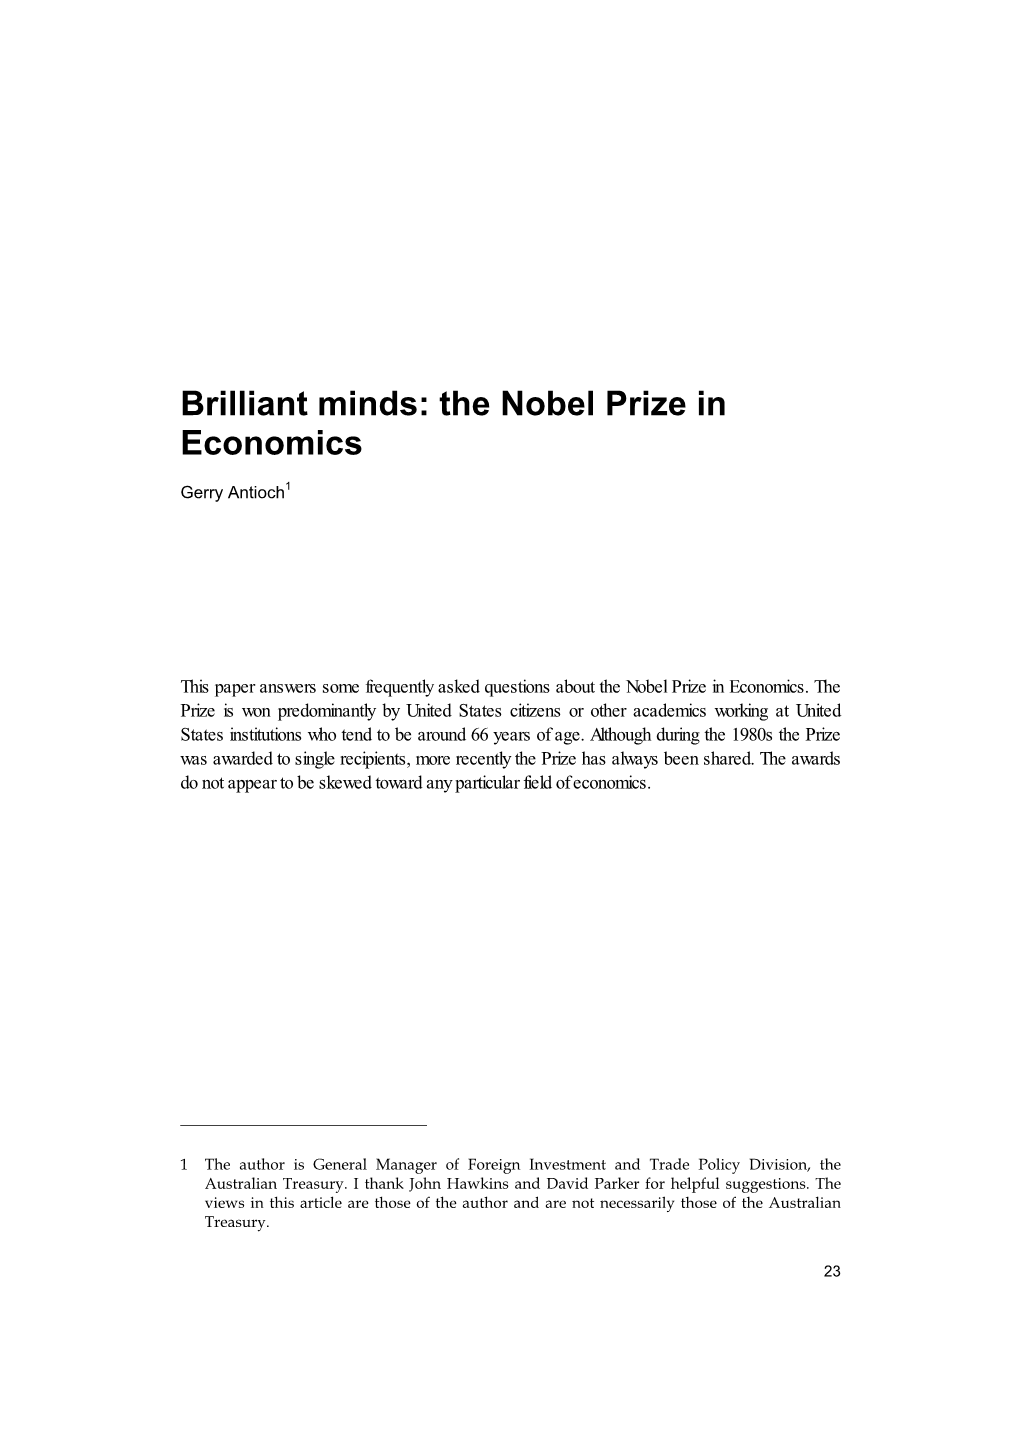 Brilliant Minds: the Nobel Prize in Economics